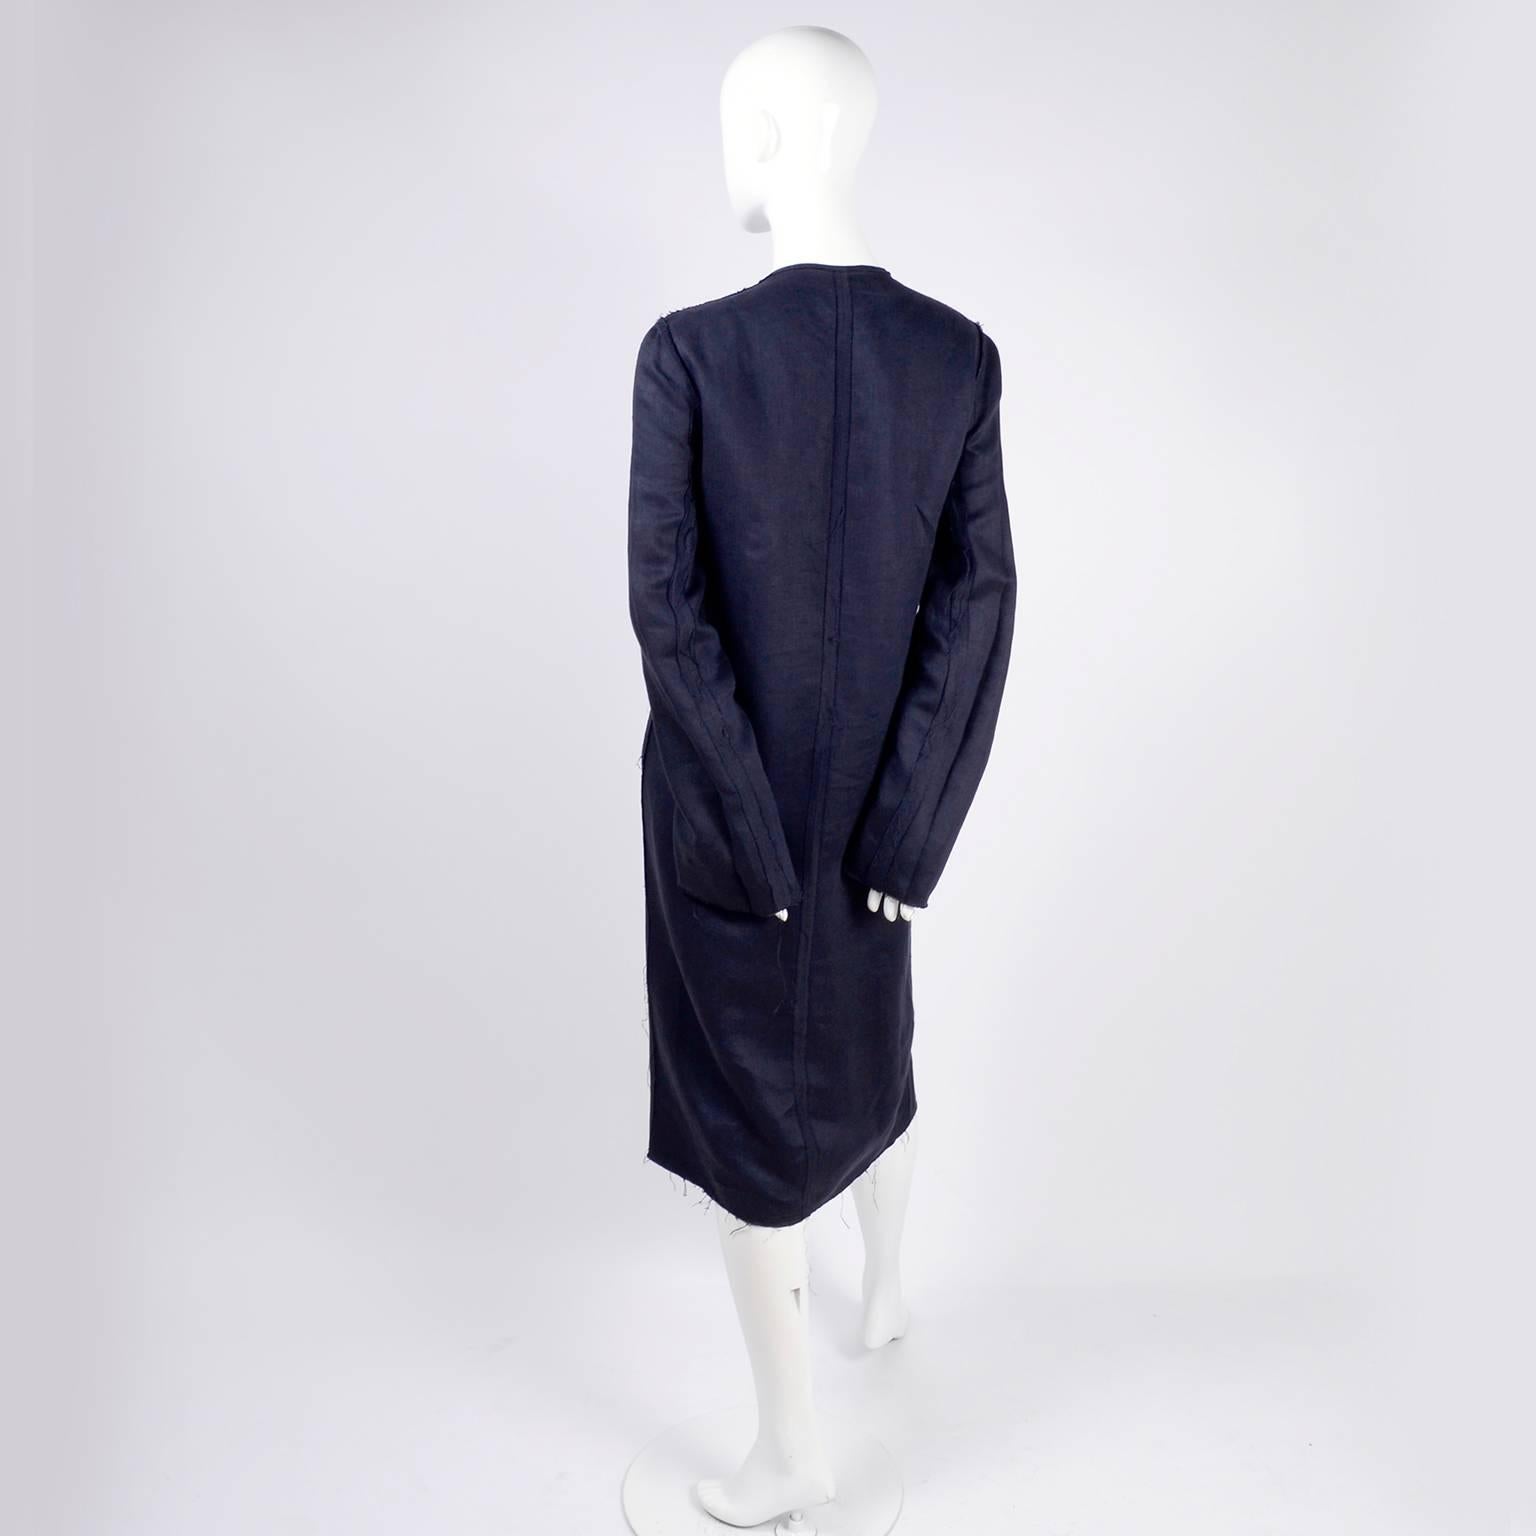 Women's Lanvin Dress or Coat in Indigo Blue Linen w/ Exposed Seams & Raw Hem Alber Elbaz